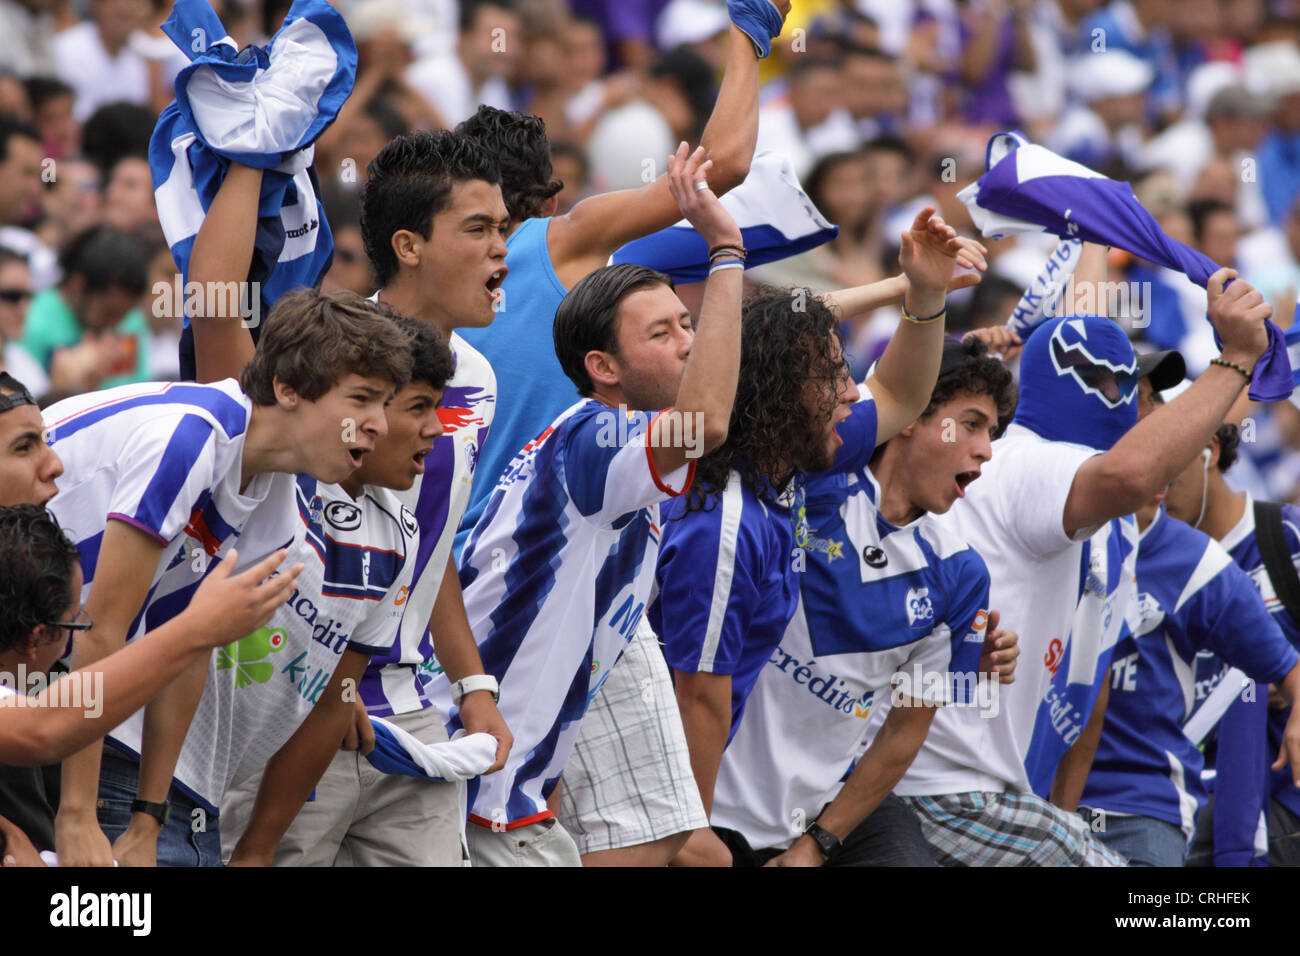 Football / soccer fans of club Cartago, Cartago stadium, Costa Rica. Stock Photo